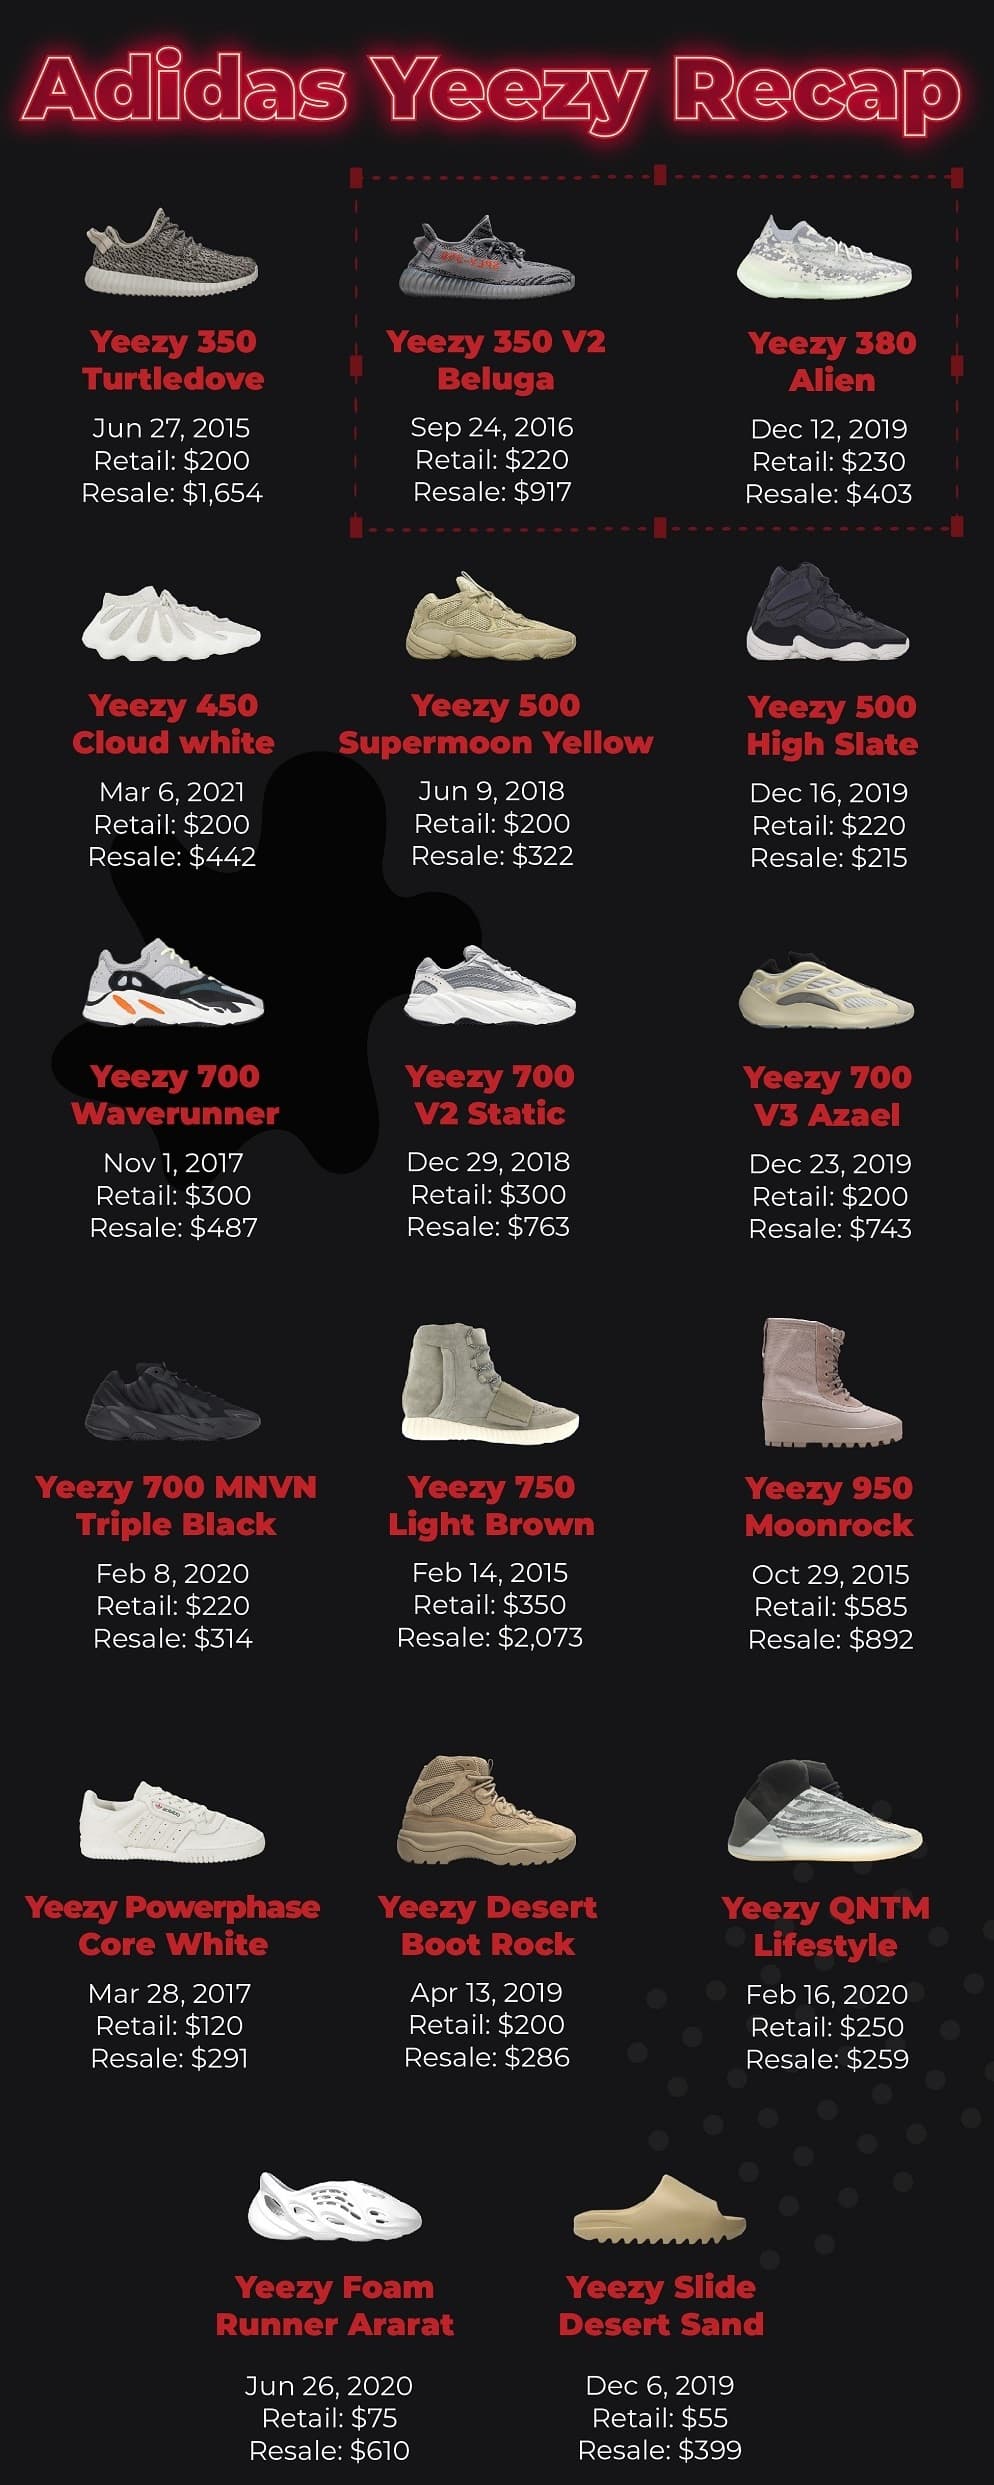 Adidas Yeezy Sneakers History